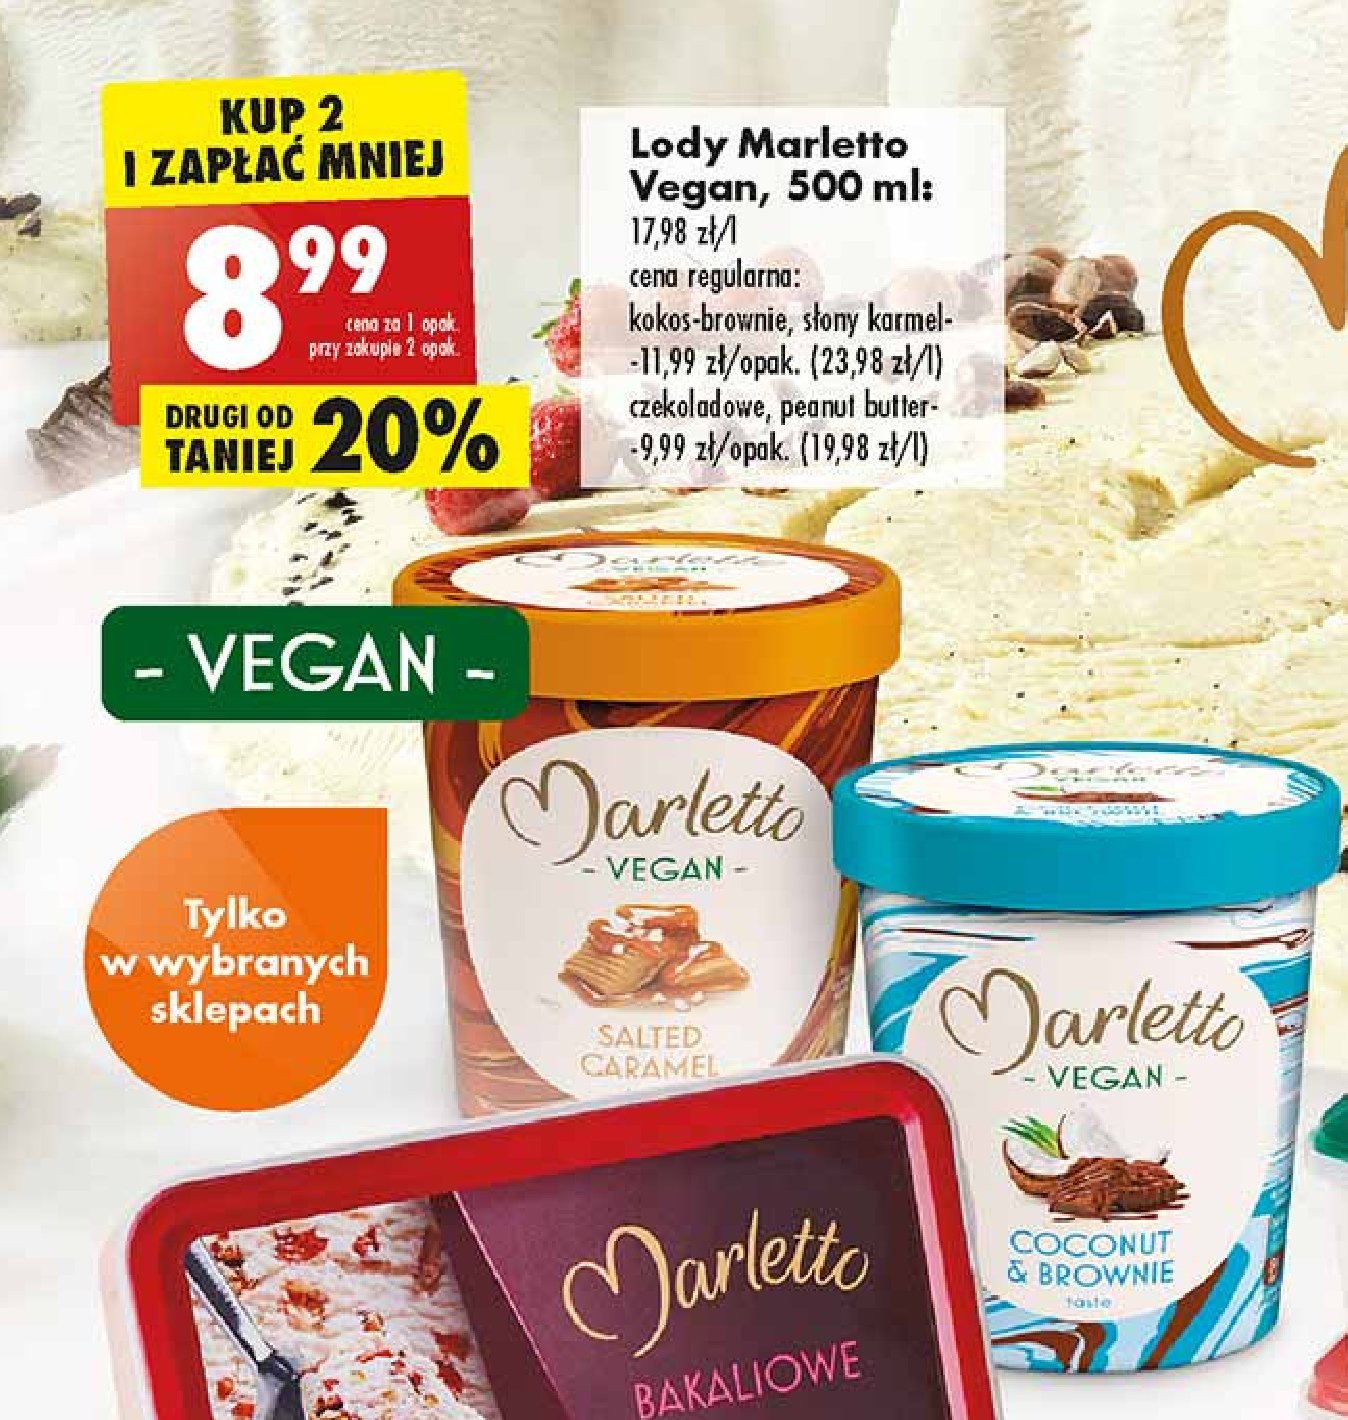 Lody czekolada Marletto vegan promocje